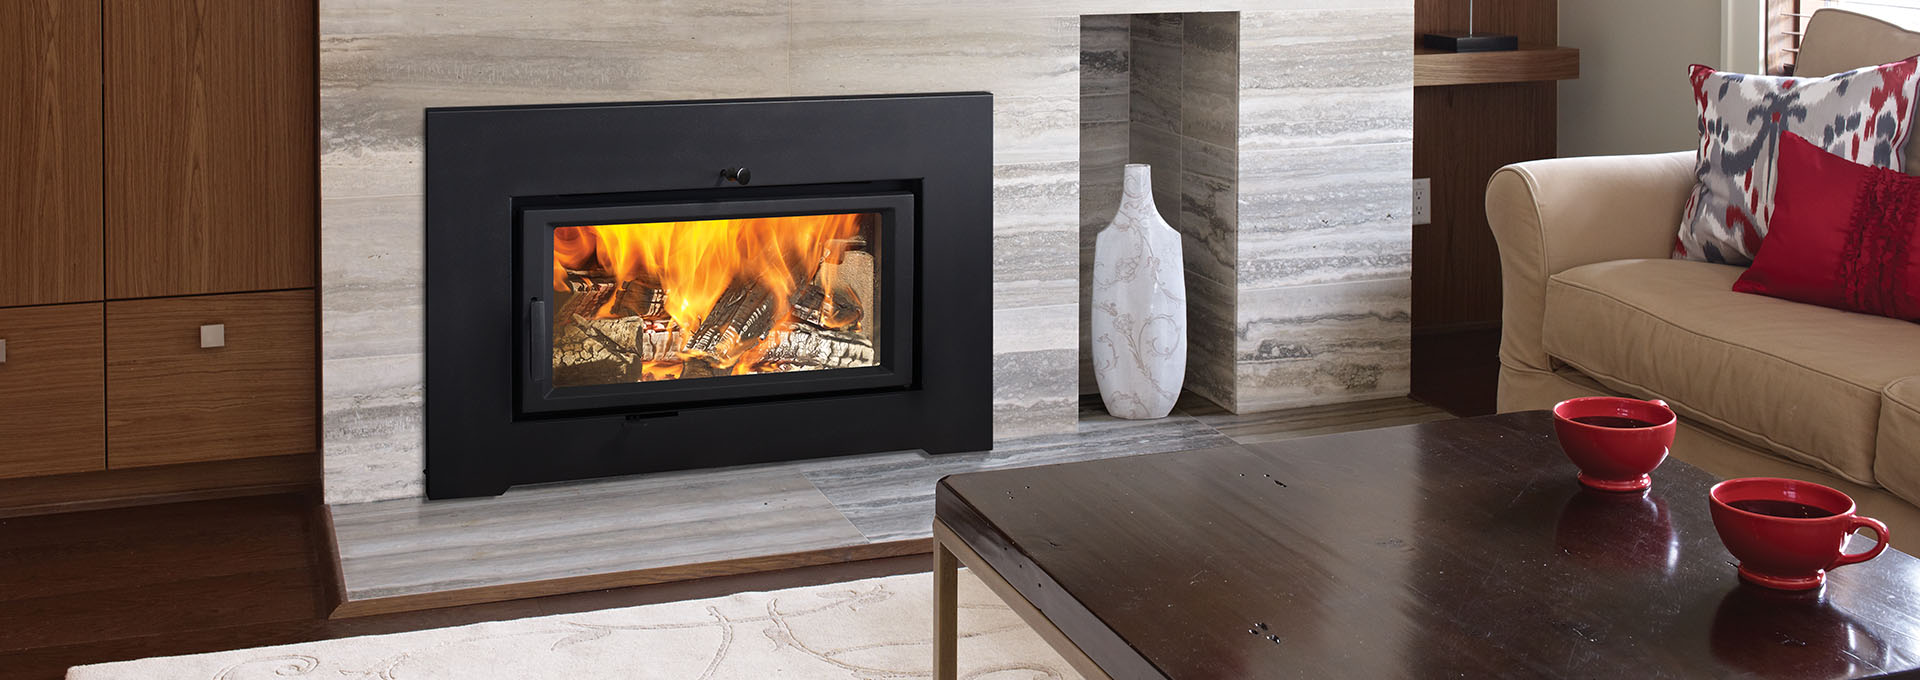 Best Wood Burning Fireplace Insert Best Of Wood Inserts Epa Certified